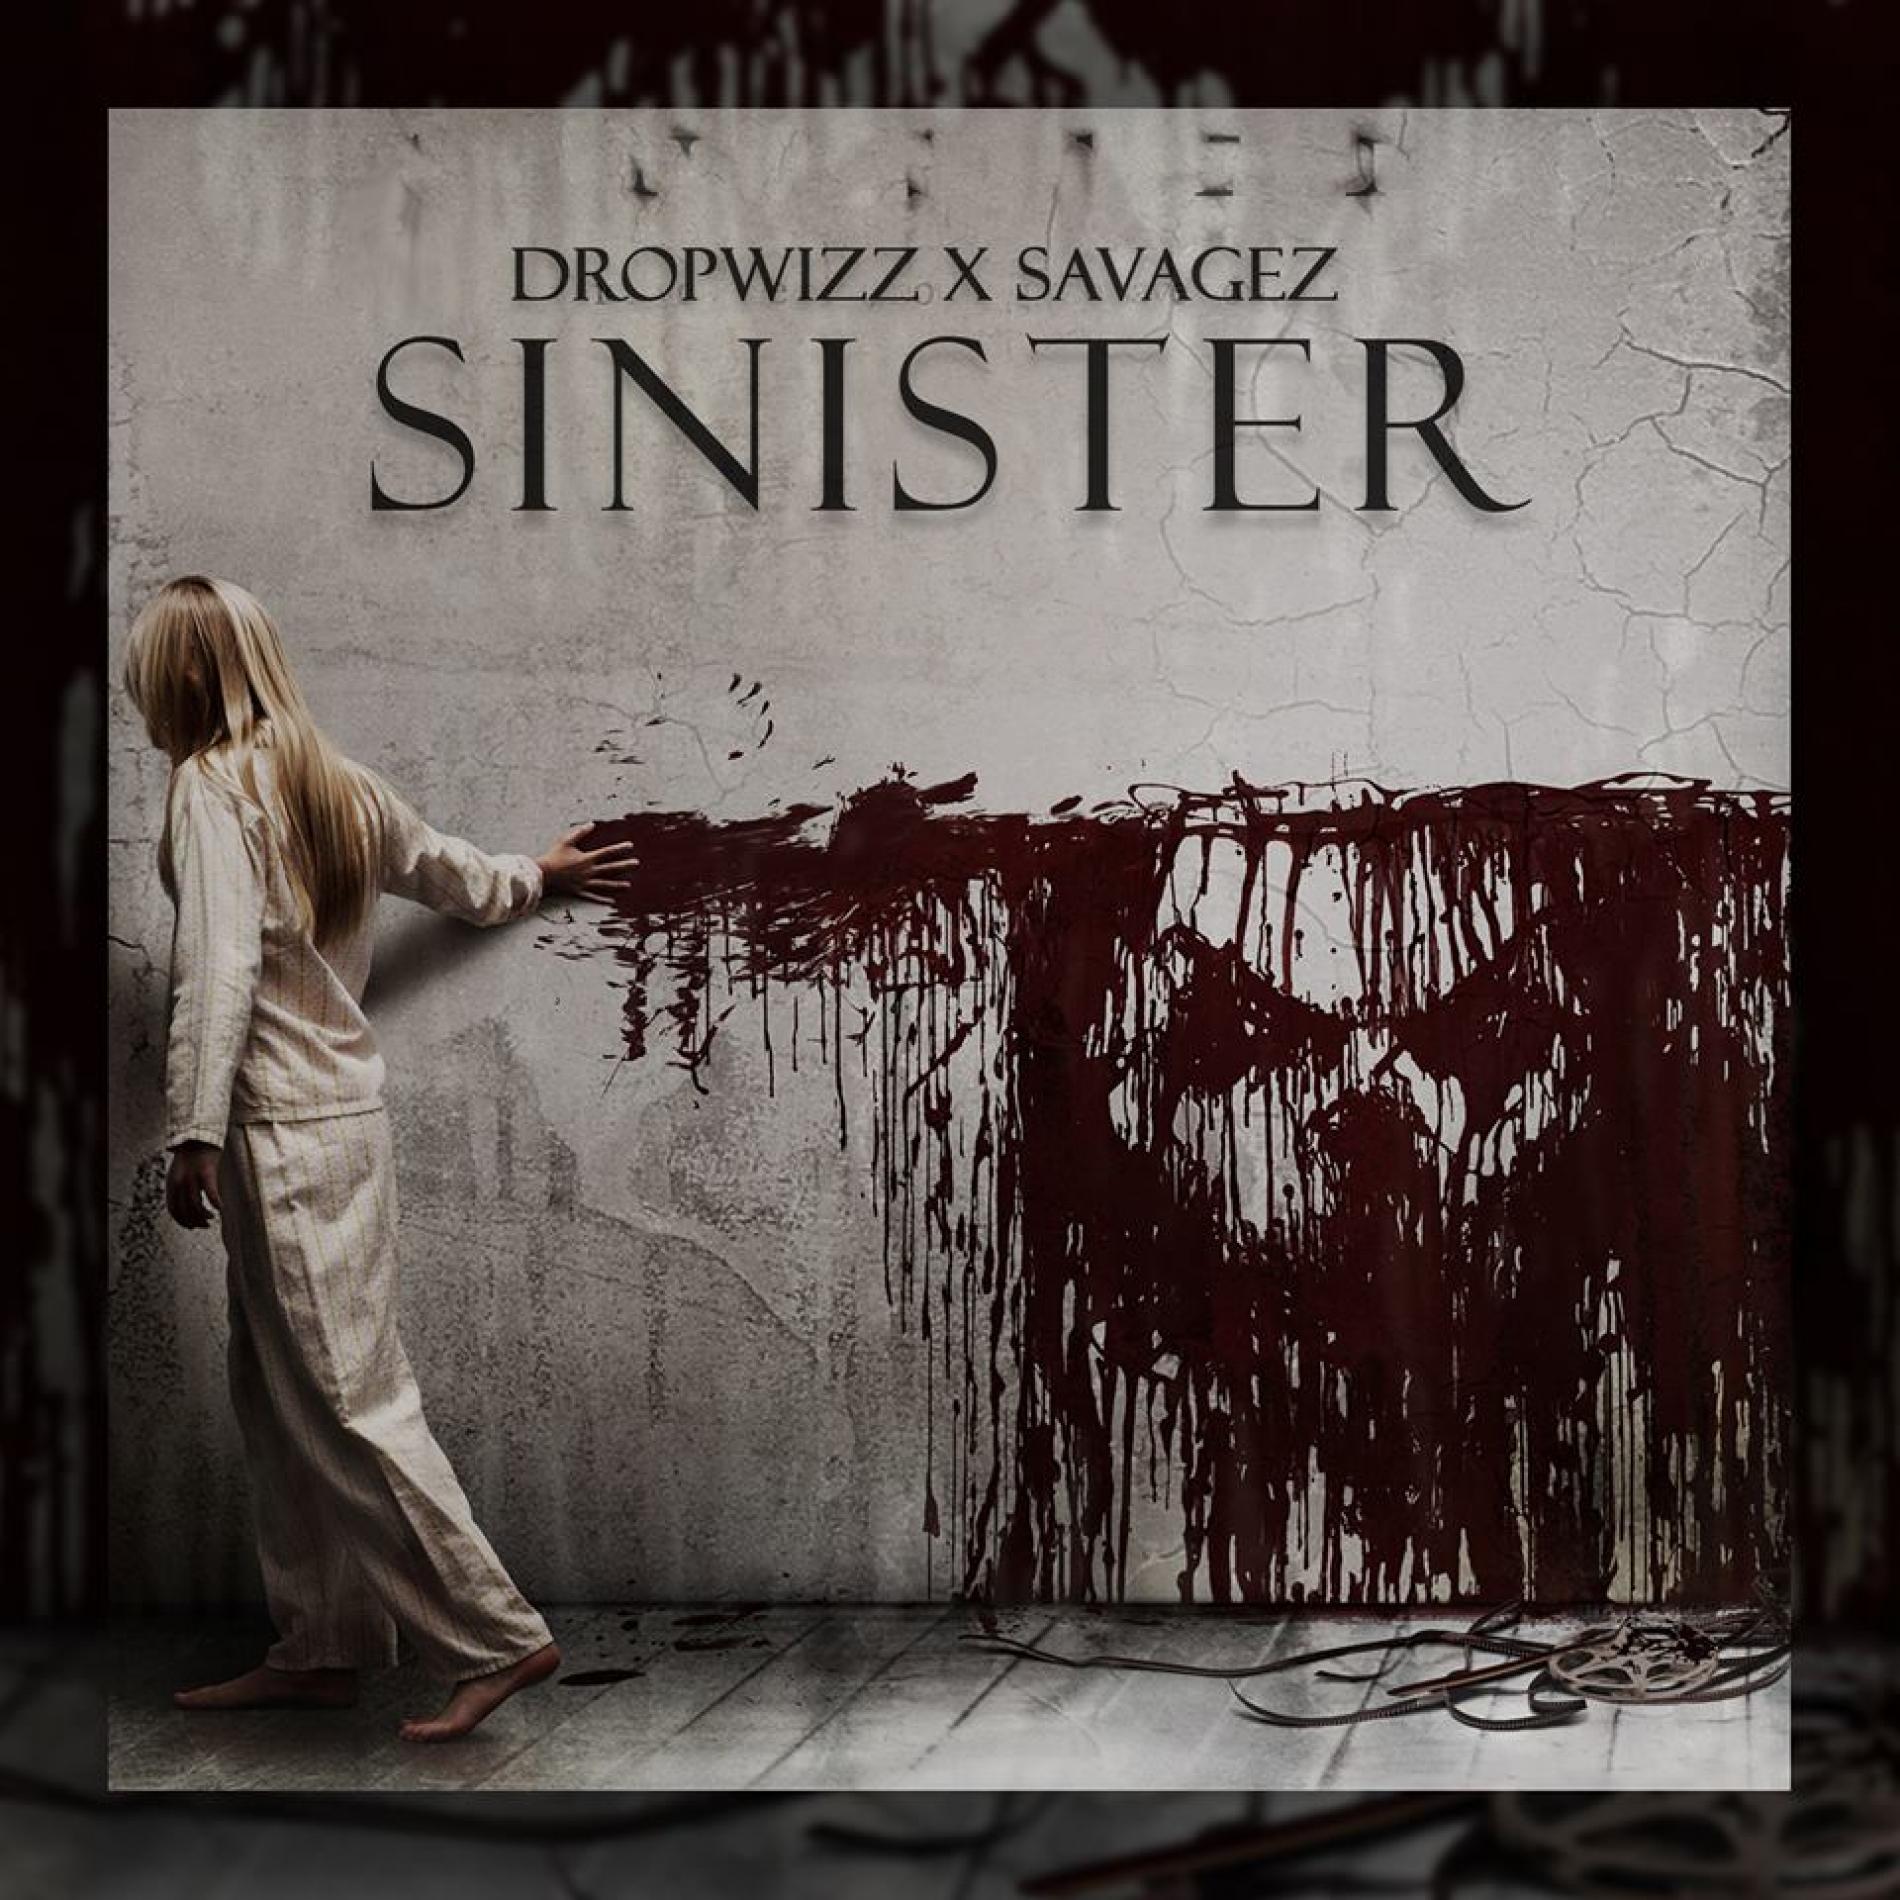 Dropwizz x Savagez – Sinister (Original Mix)